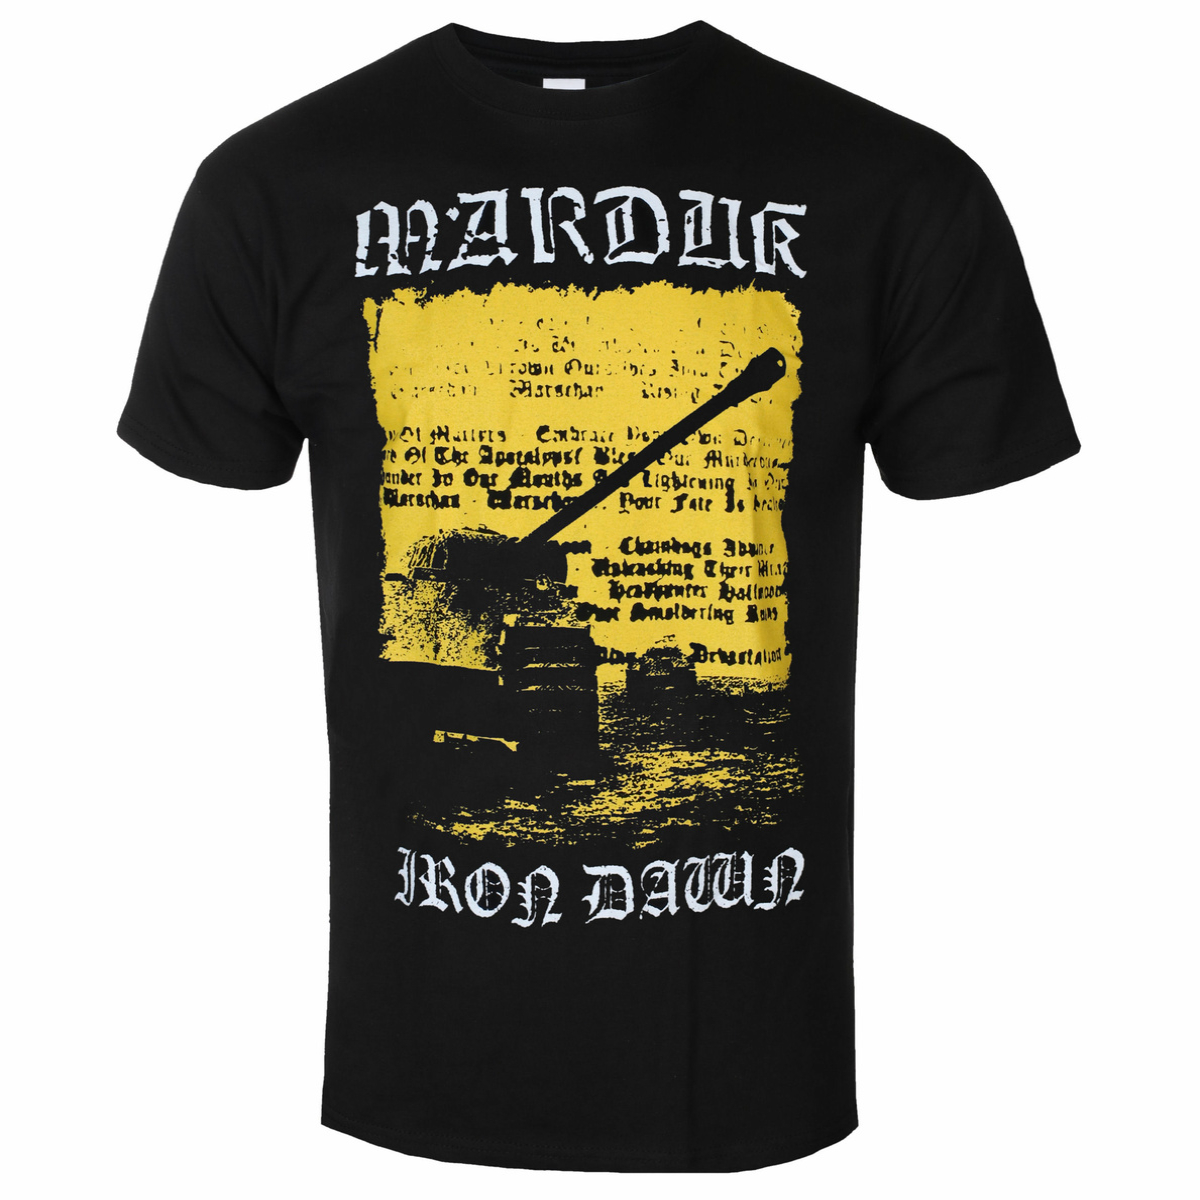 Marduk - Iron Dawn